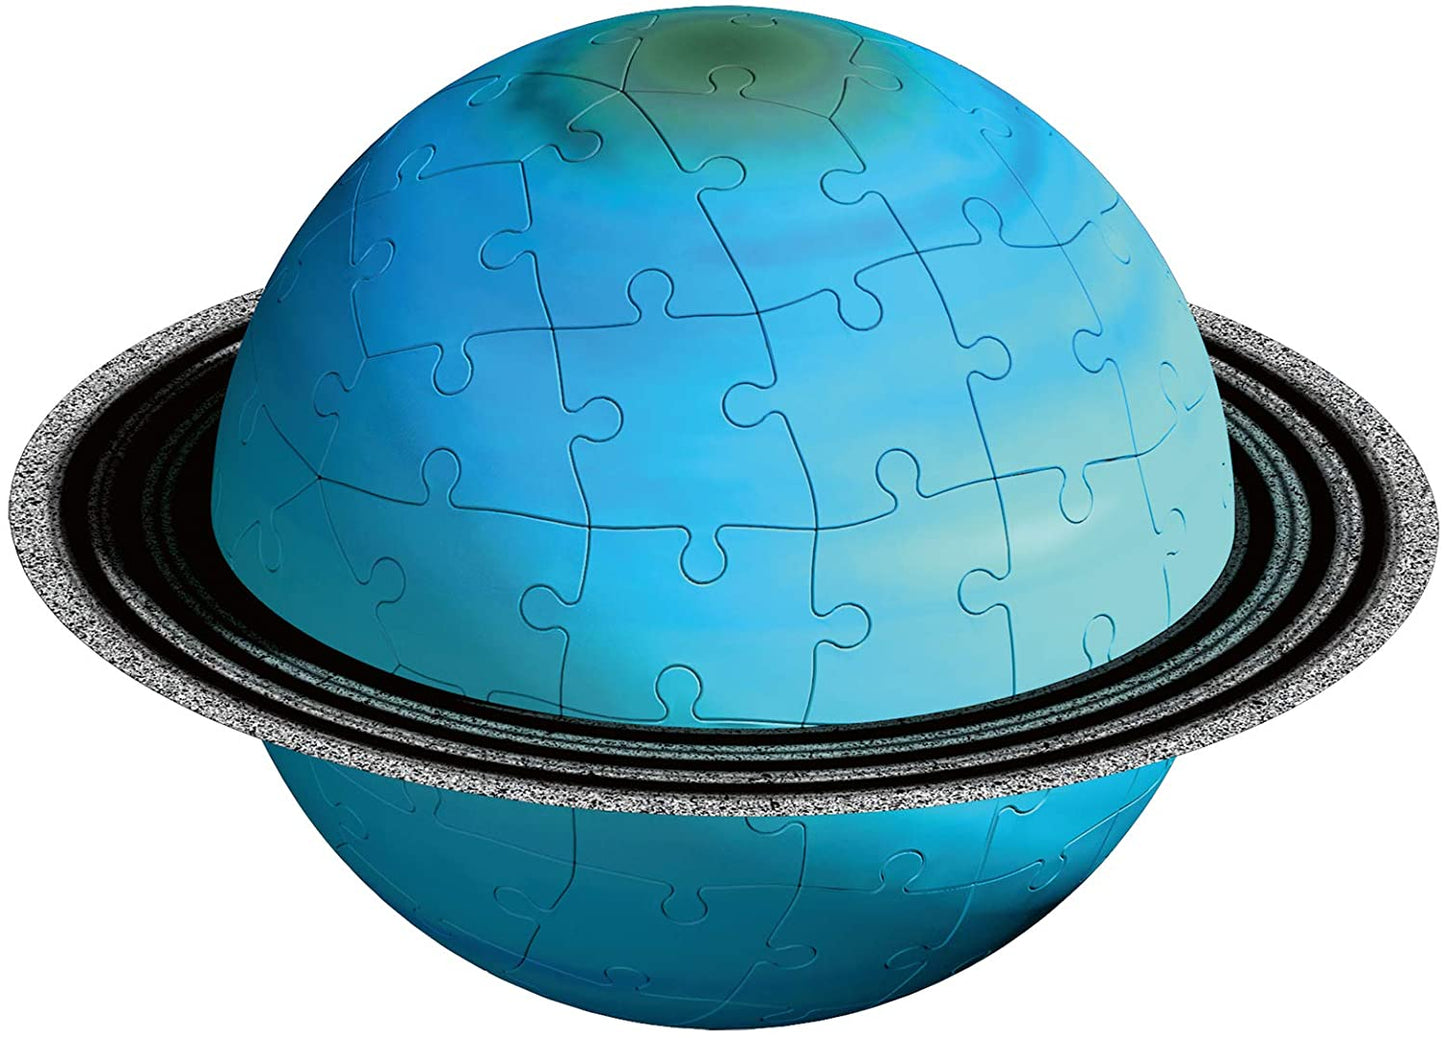 Ravensburger - Planetary Solar System 522 Piece 3D Jigsaw Puzzle